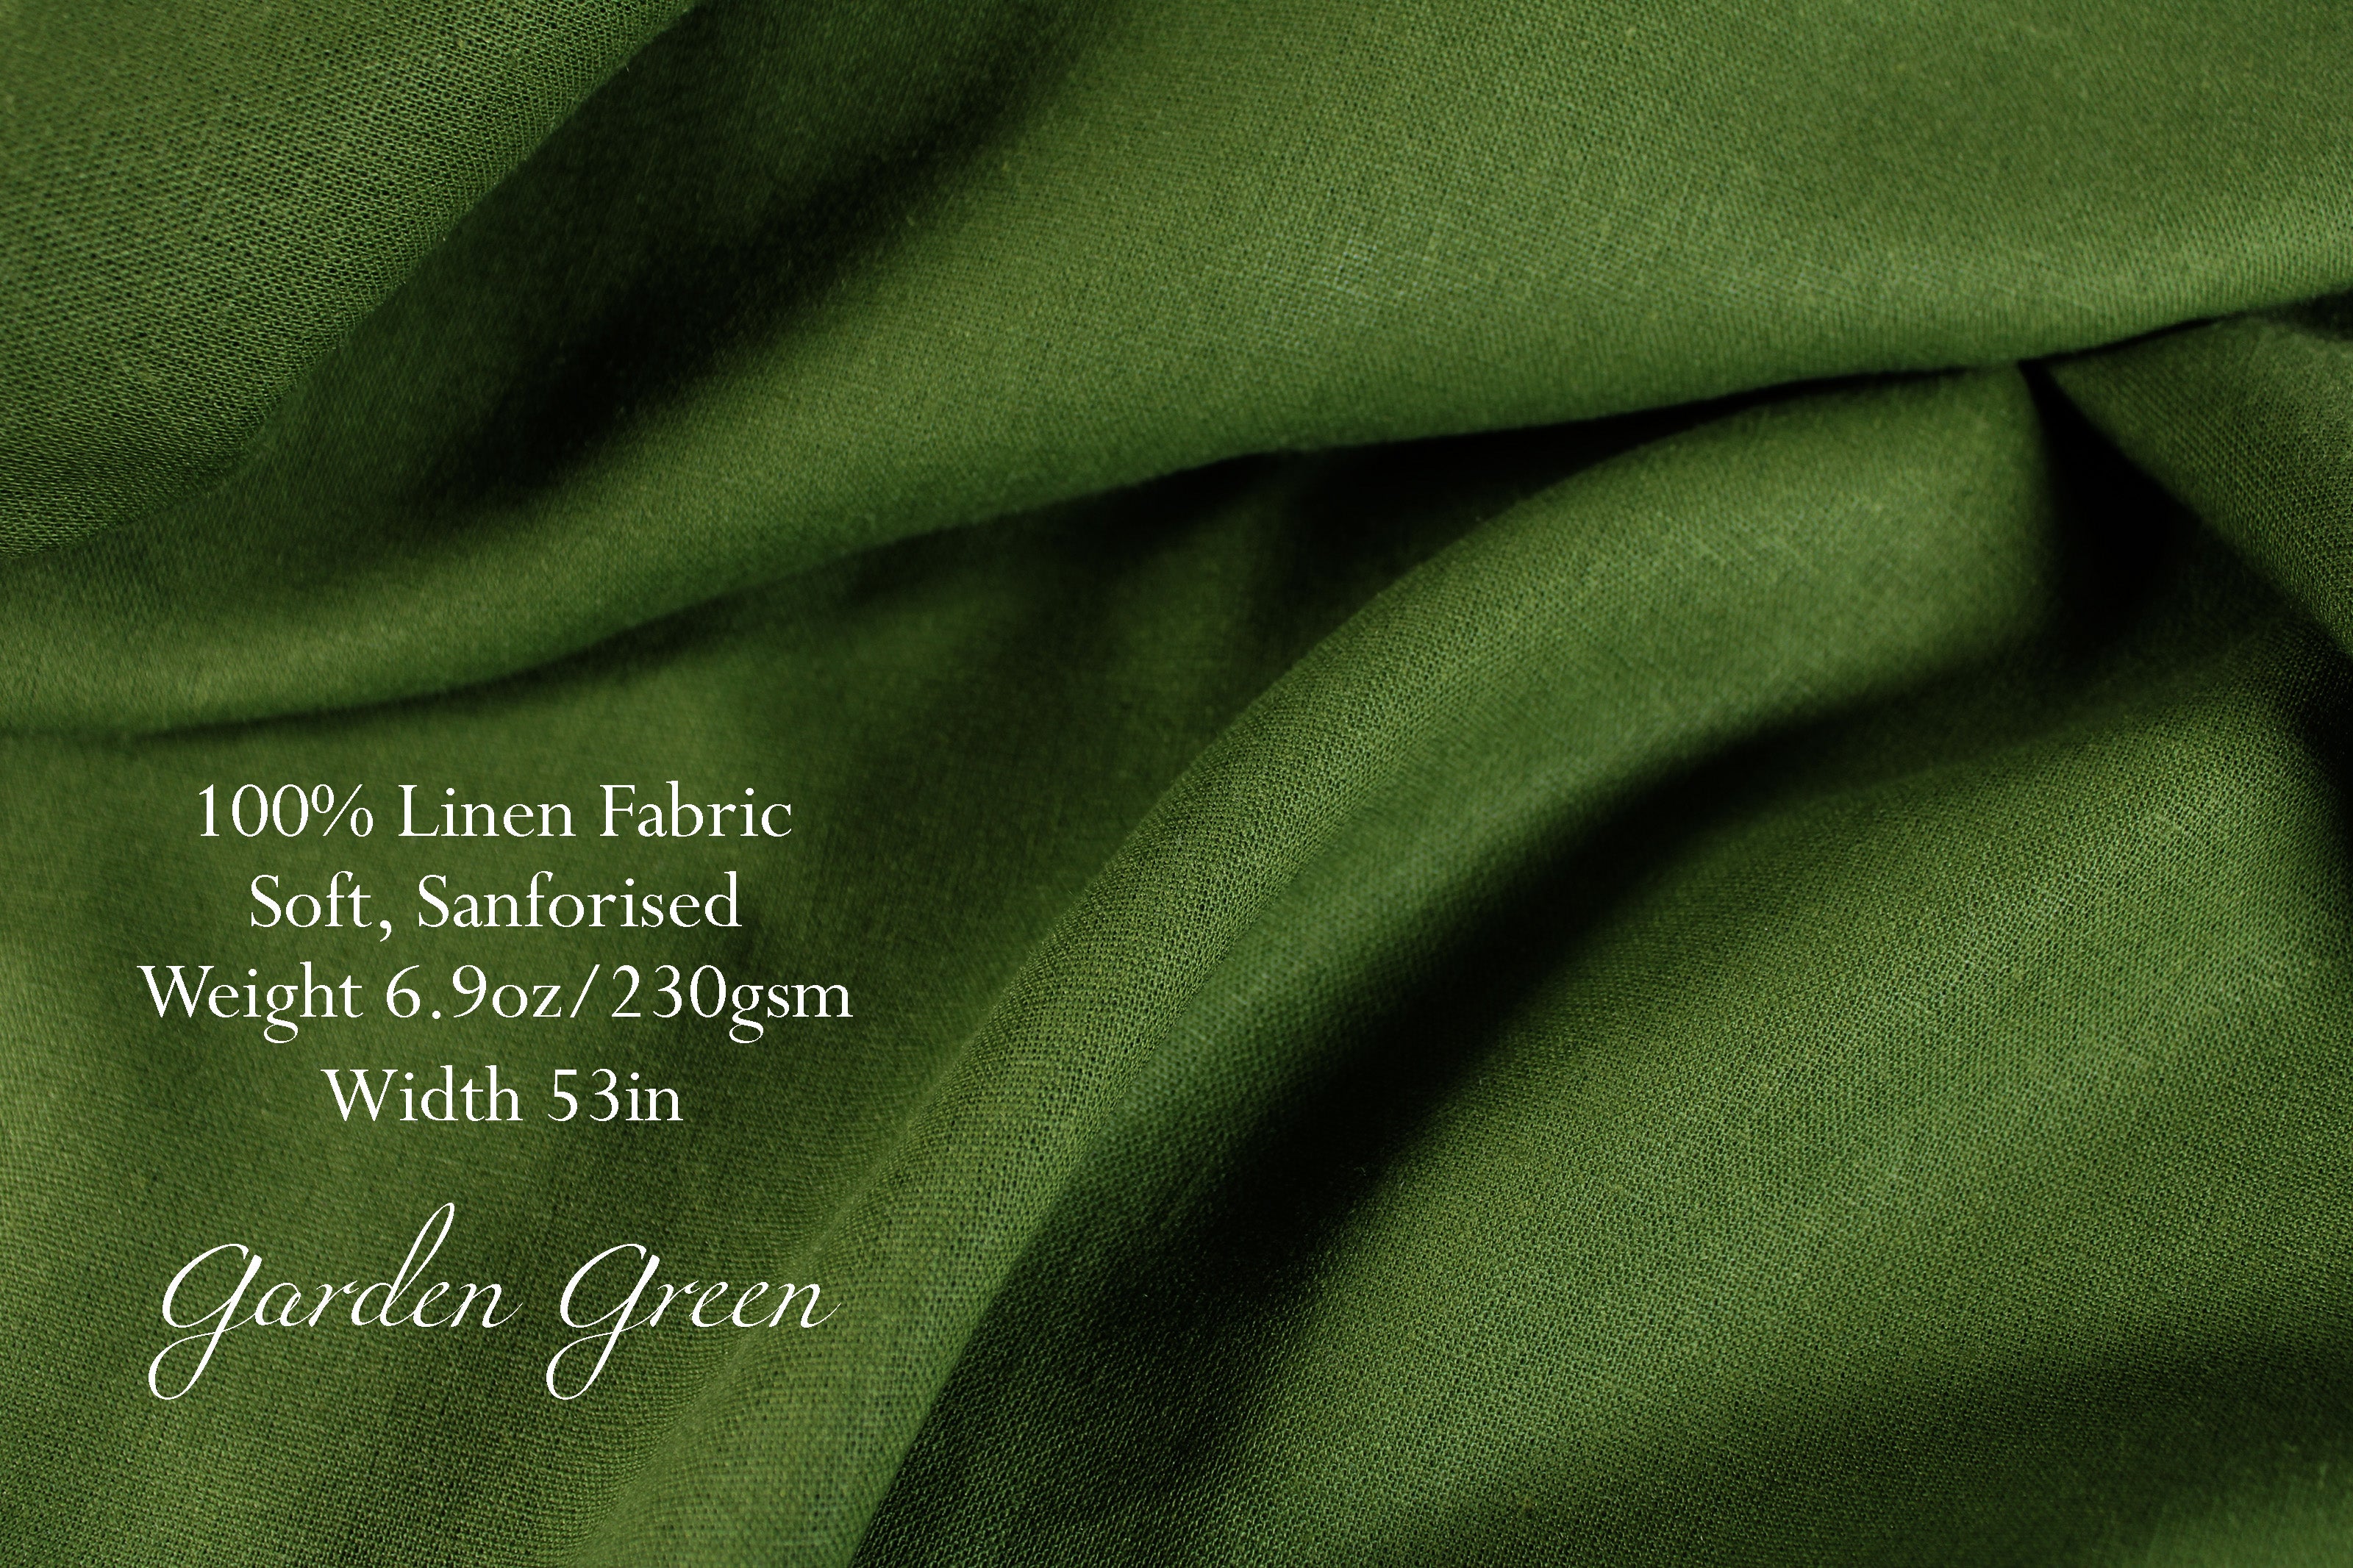 WHOLESALE Linen Fabric USA / Linen Fabric ROLL Wholesale / Linen by the Bolt / Garden green linen fabric